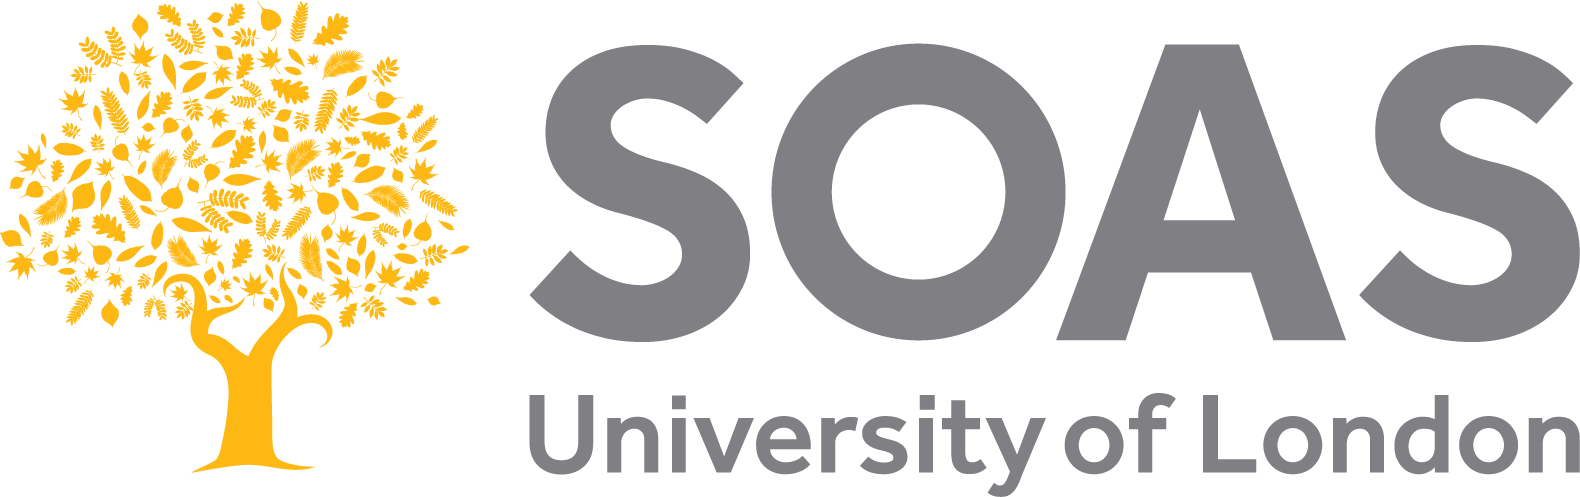 SOAS Logo